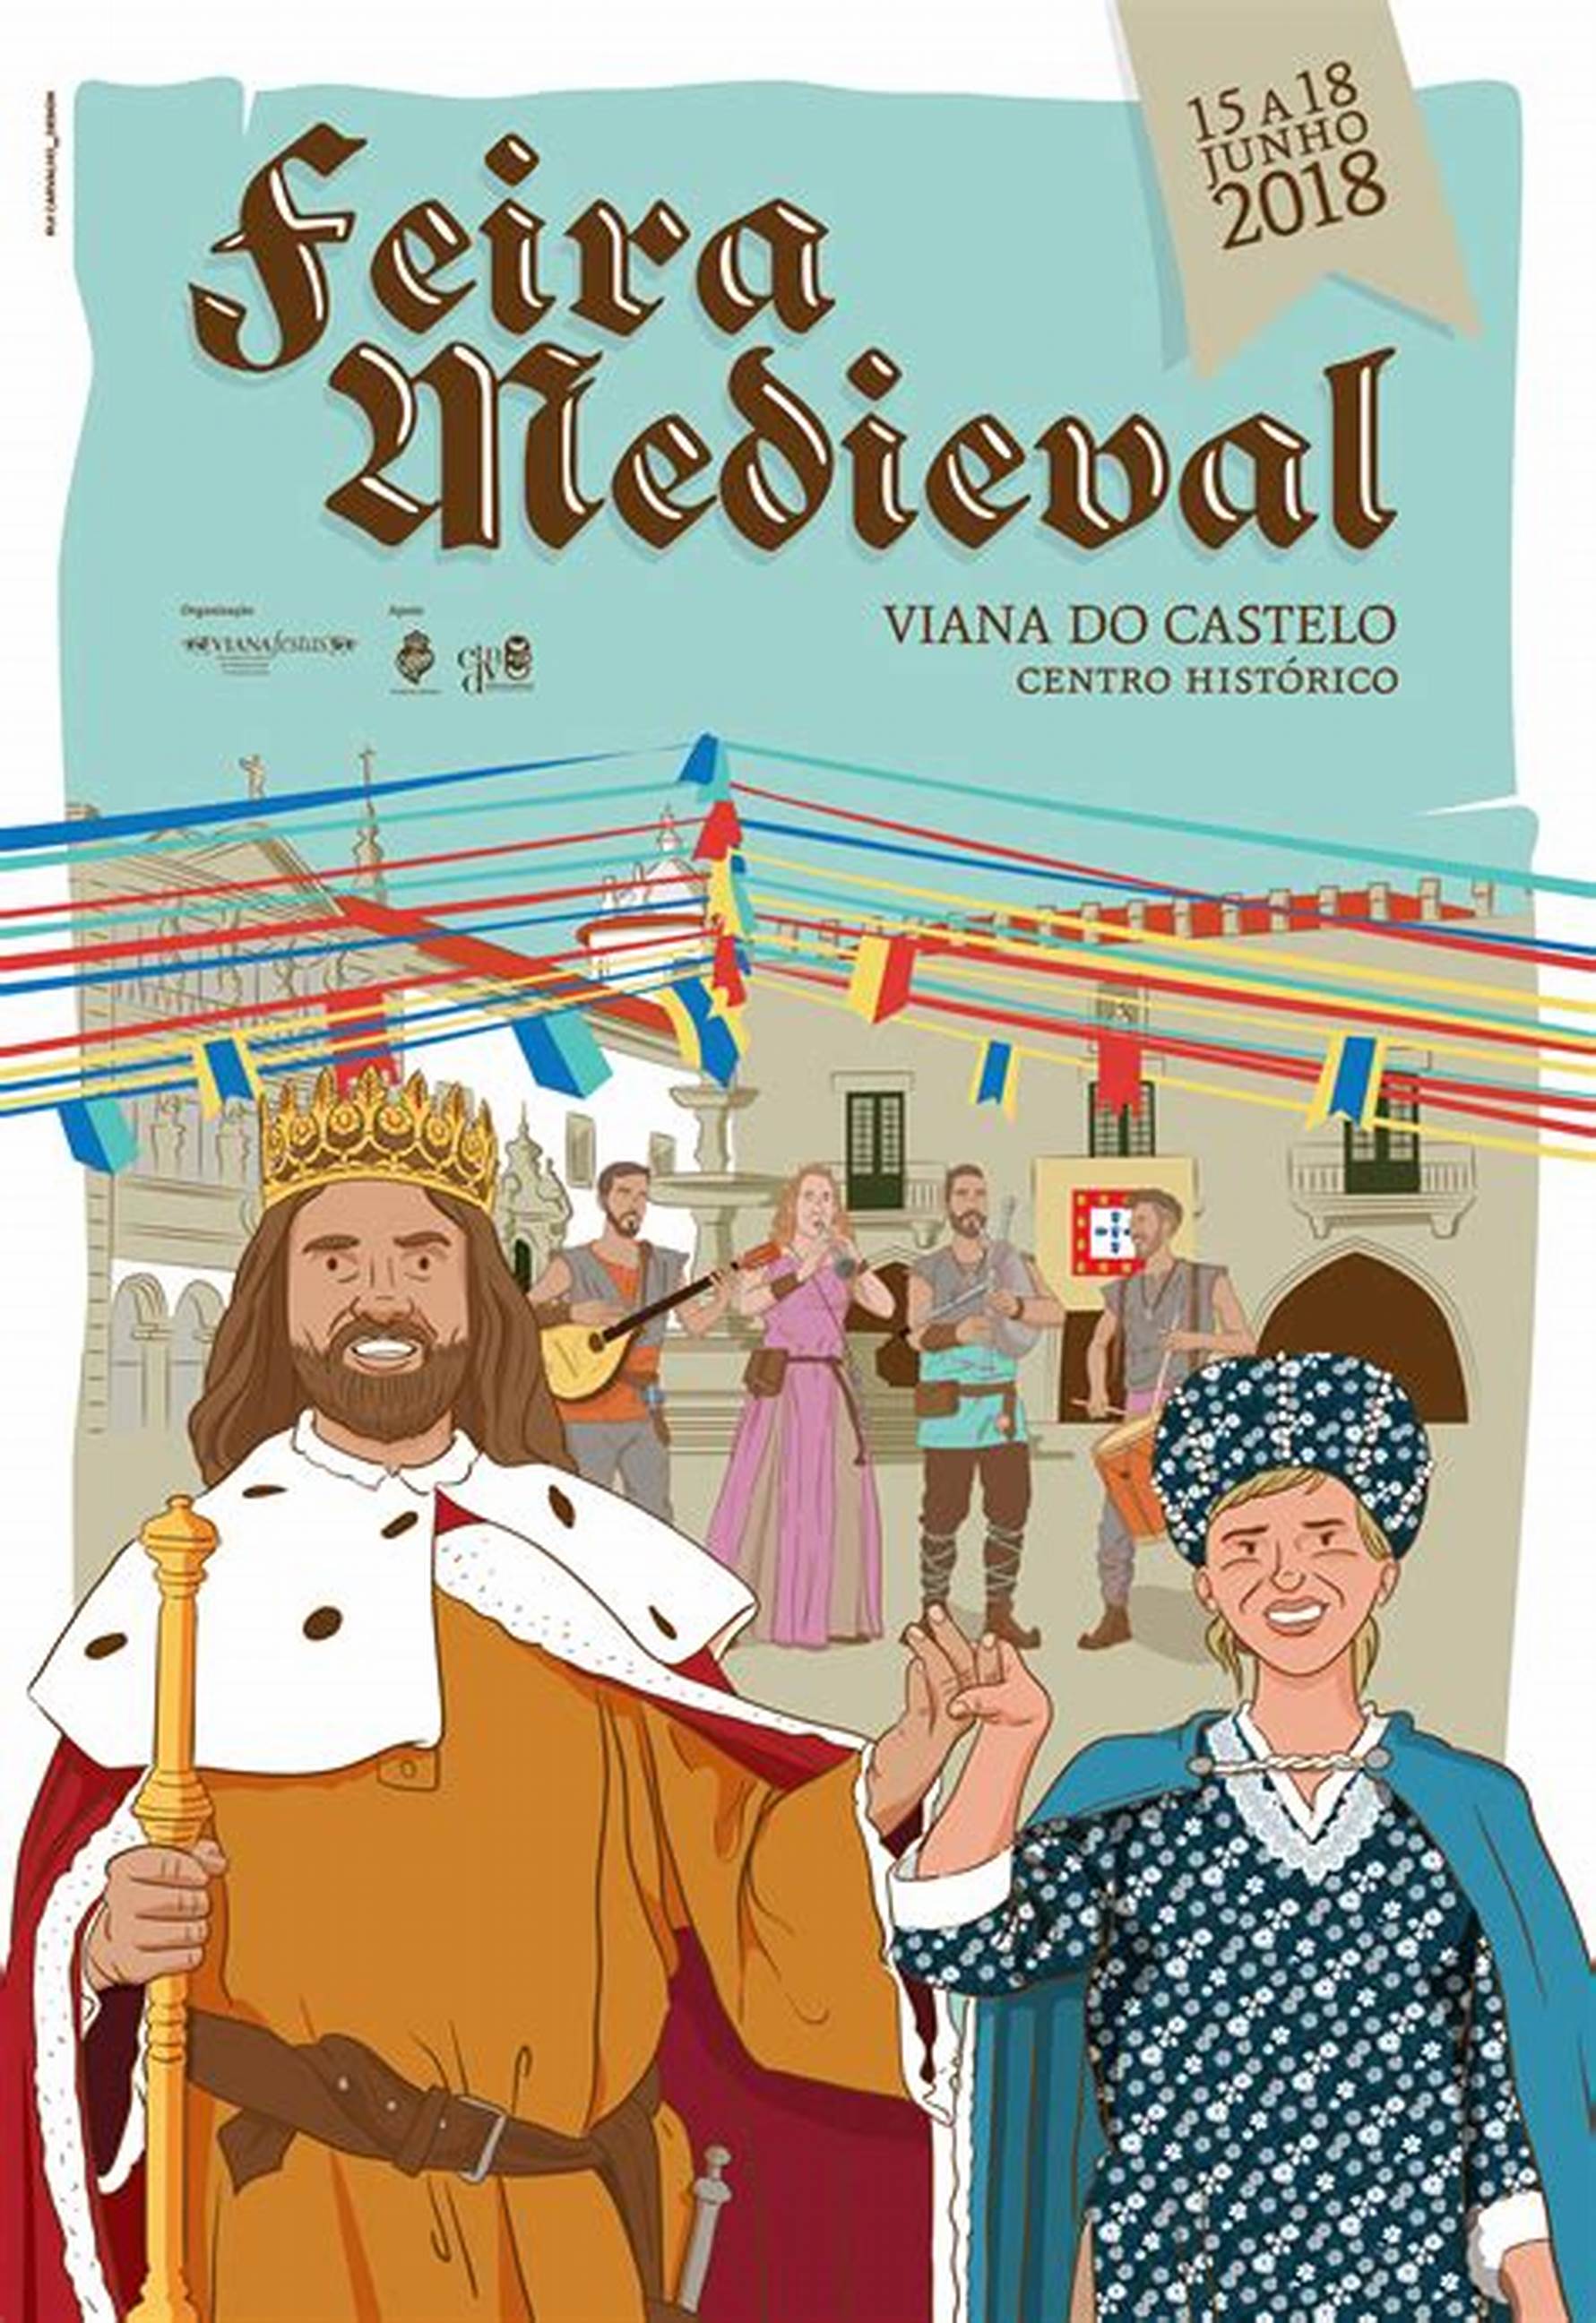 Feira Medieval, Viana do Castelo Feiras e mercados medievais, Ferias y mercados medievales